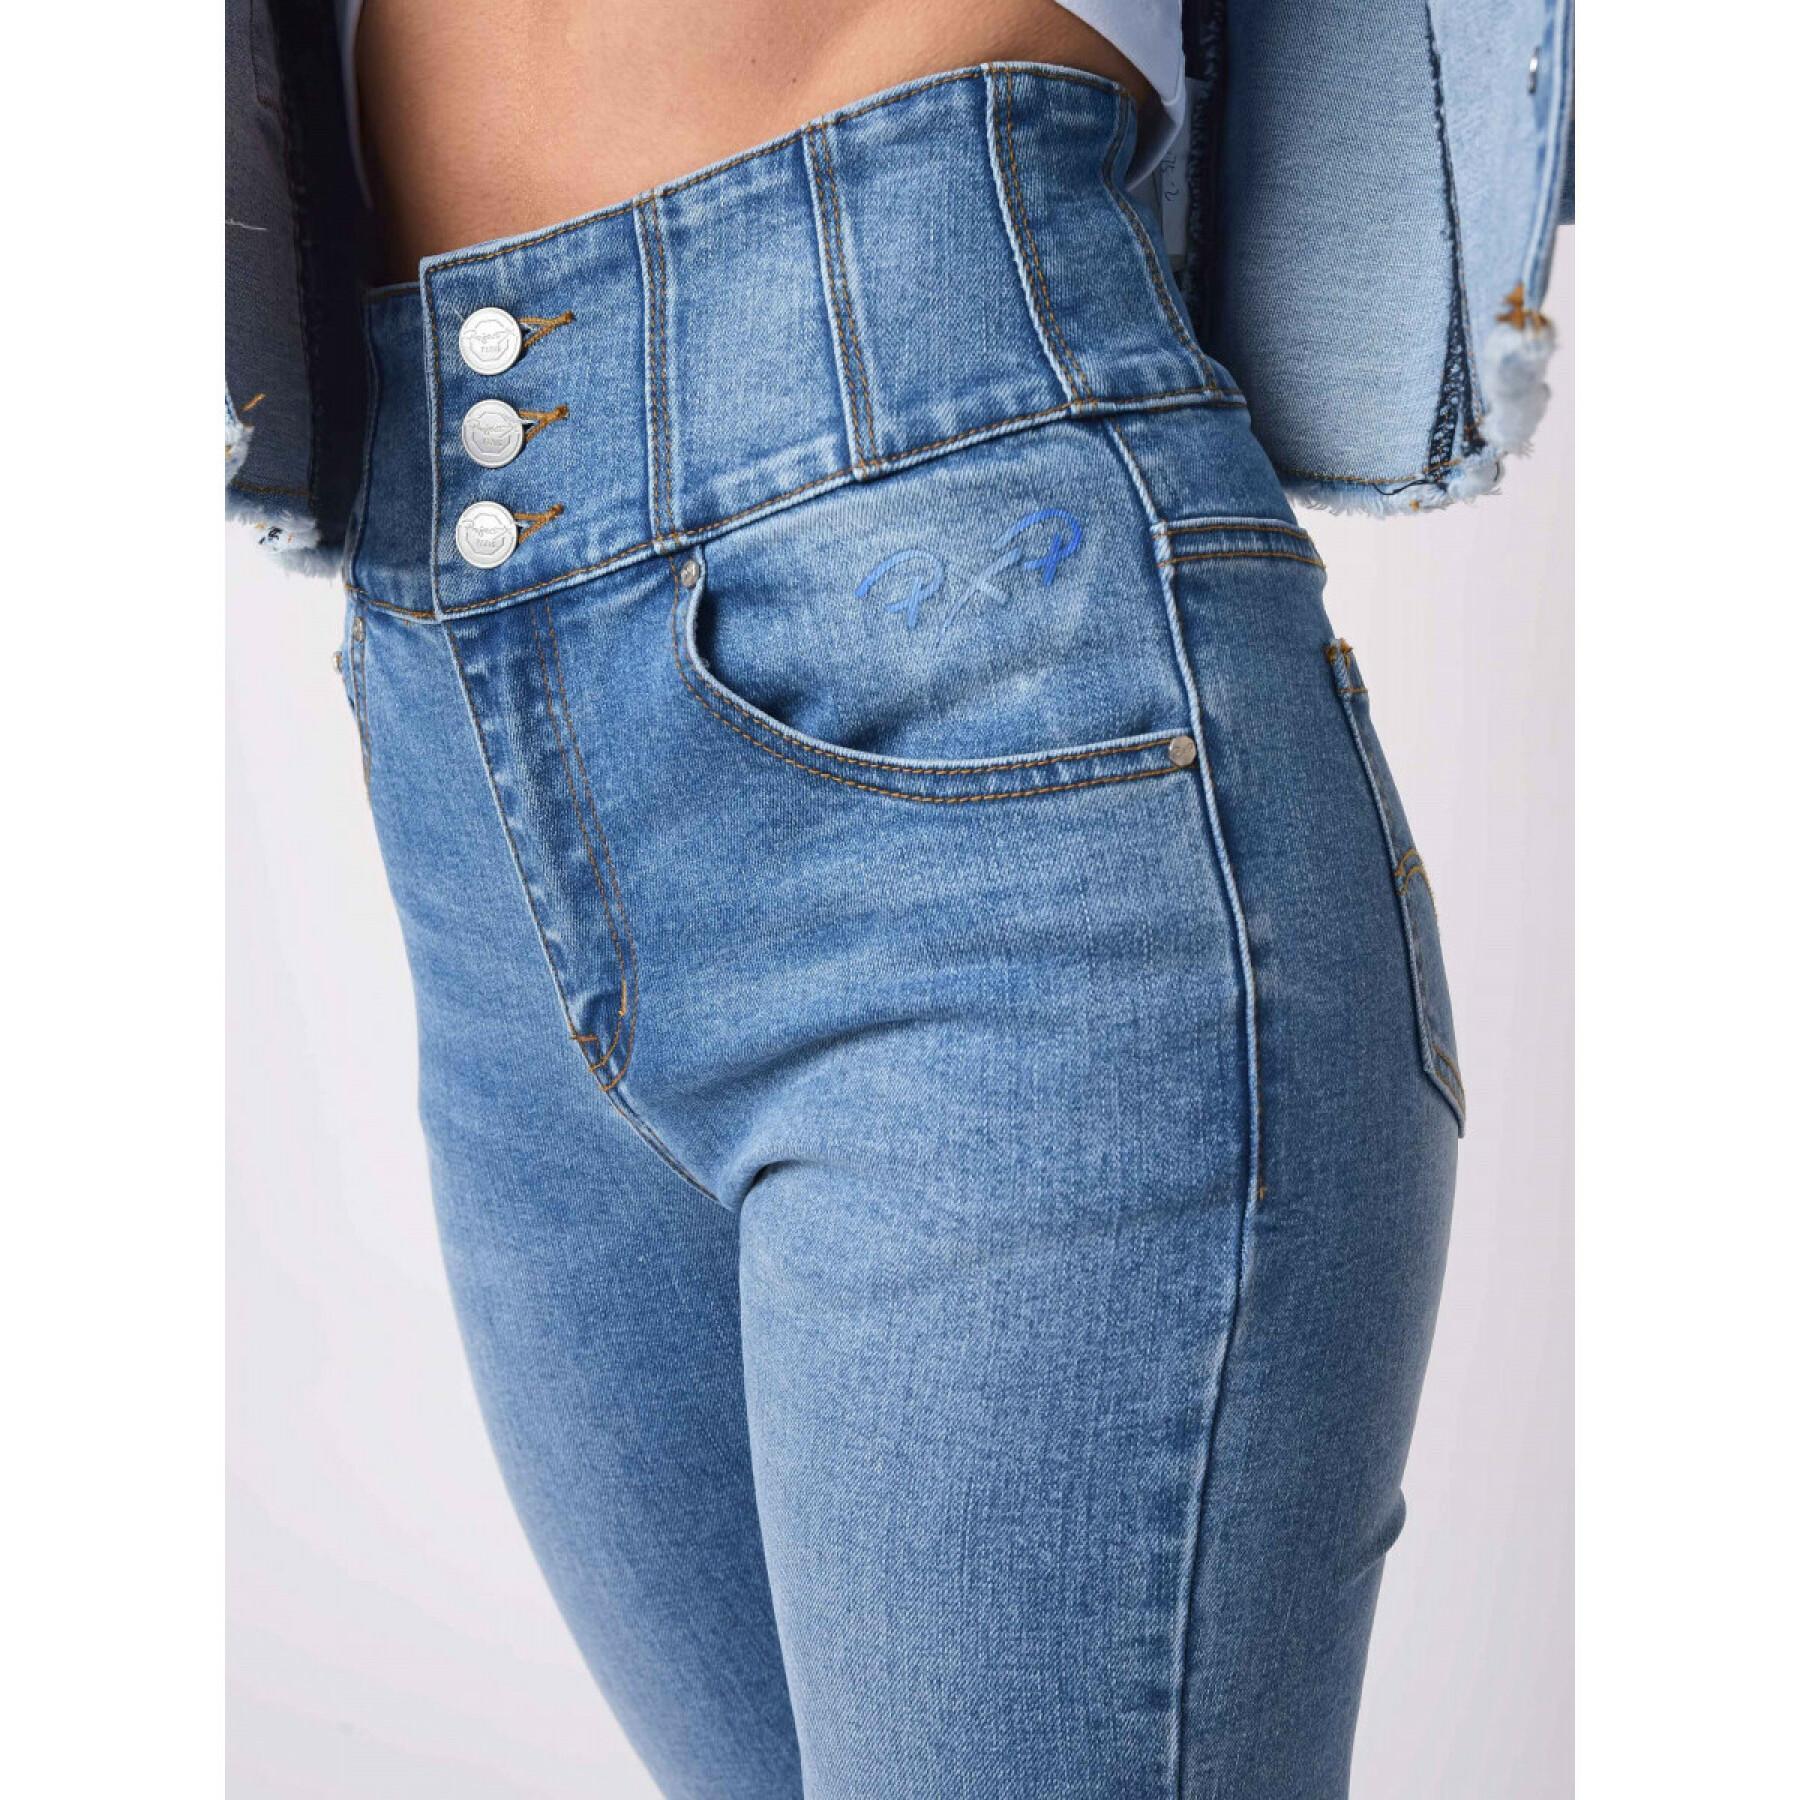 Women's high waist skinny jeans Project X Paris